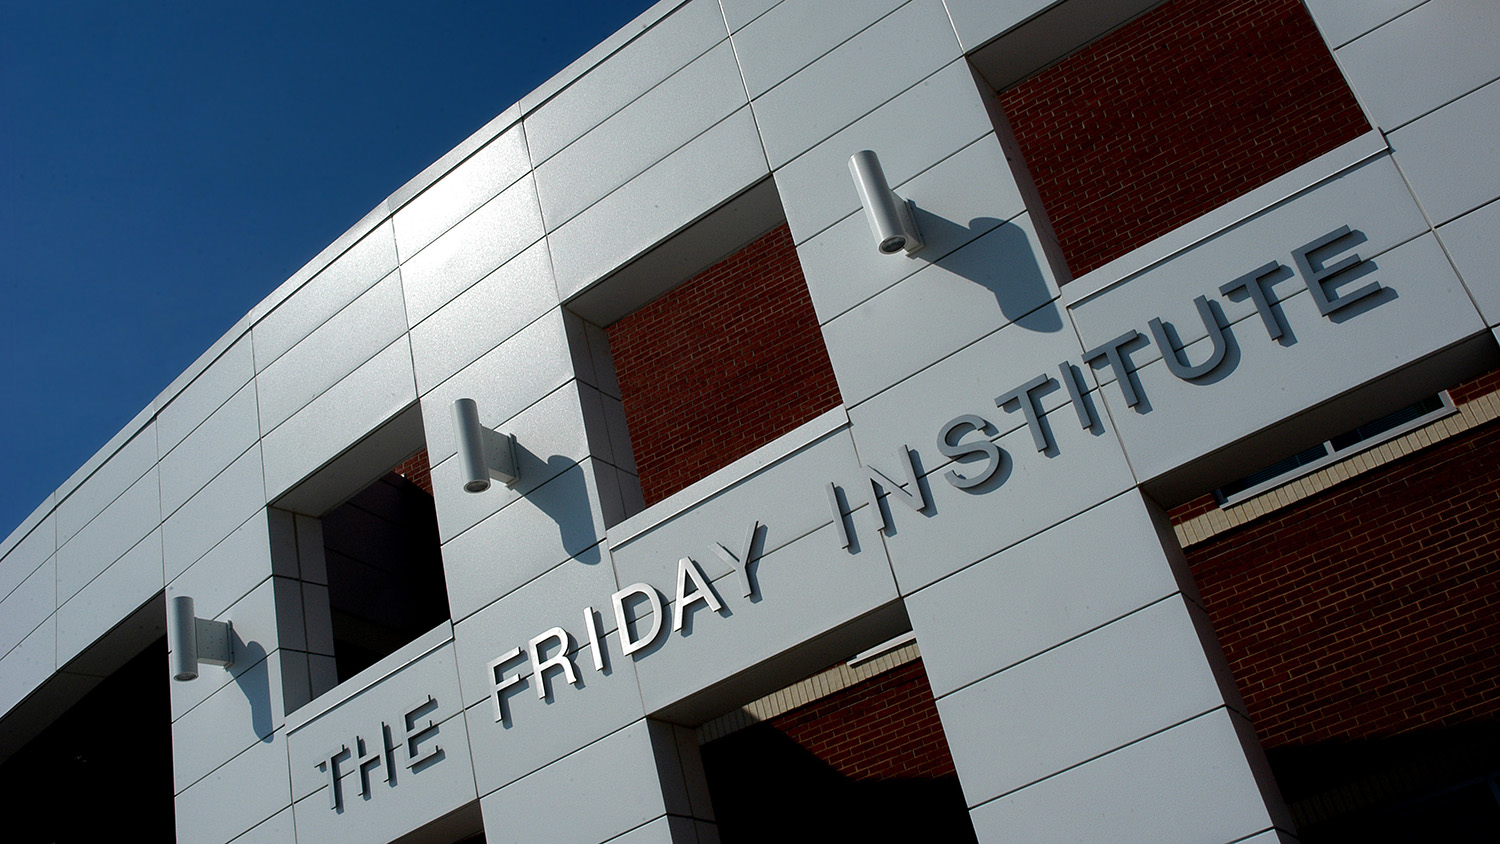 The Friday Institute